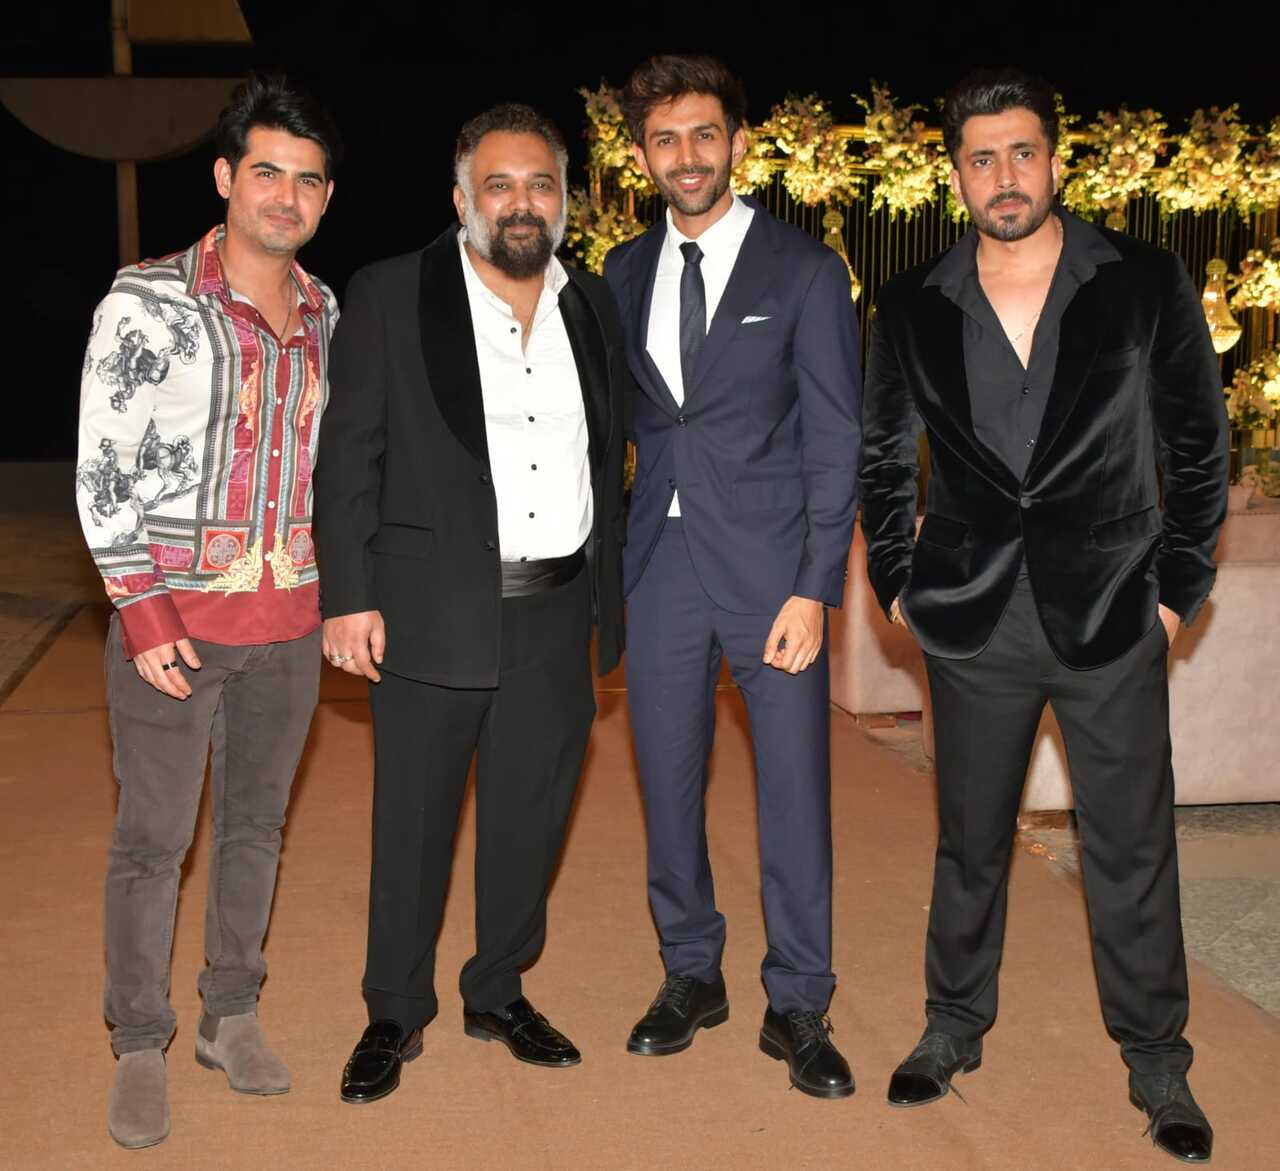 The Pyaar Ka Punchnama boys Om Kapoor, Kartik Aaryan, Sunny Singh pose with director Luv Ranjan. They had united for Sunny's sister's wedding